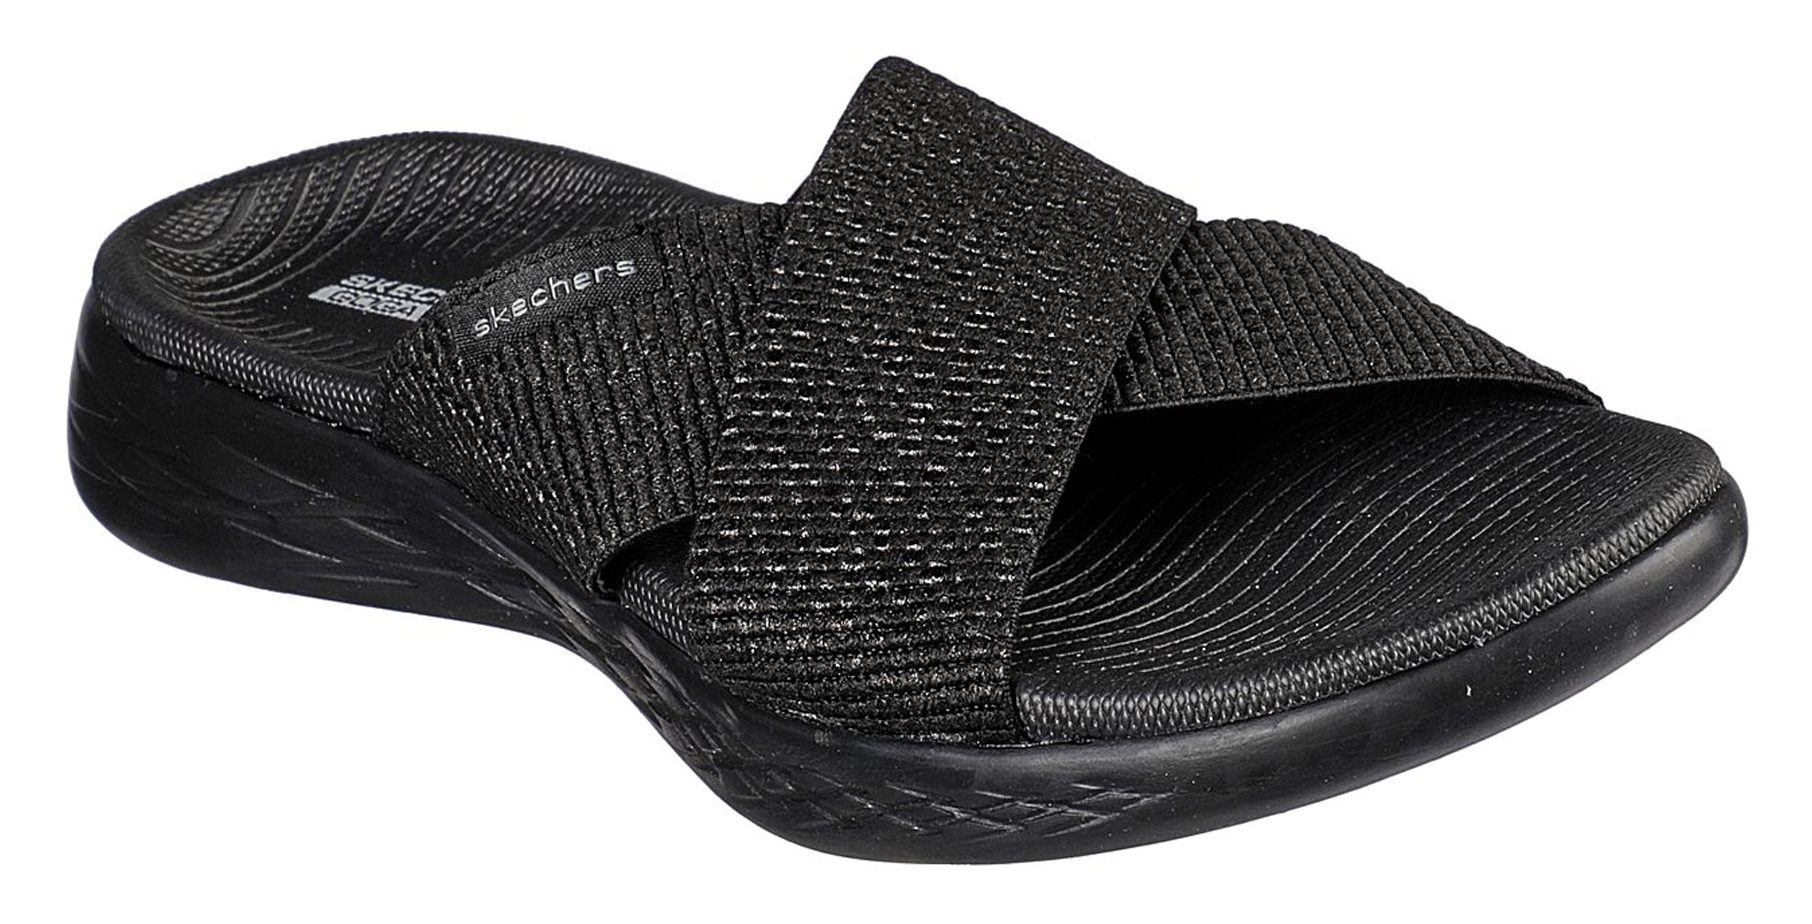 Skechers On the GO 600 - Glistening Black 16259 BBK - Mule Sandals ...